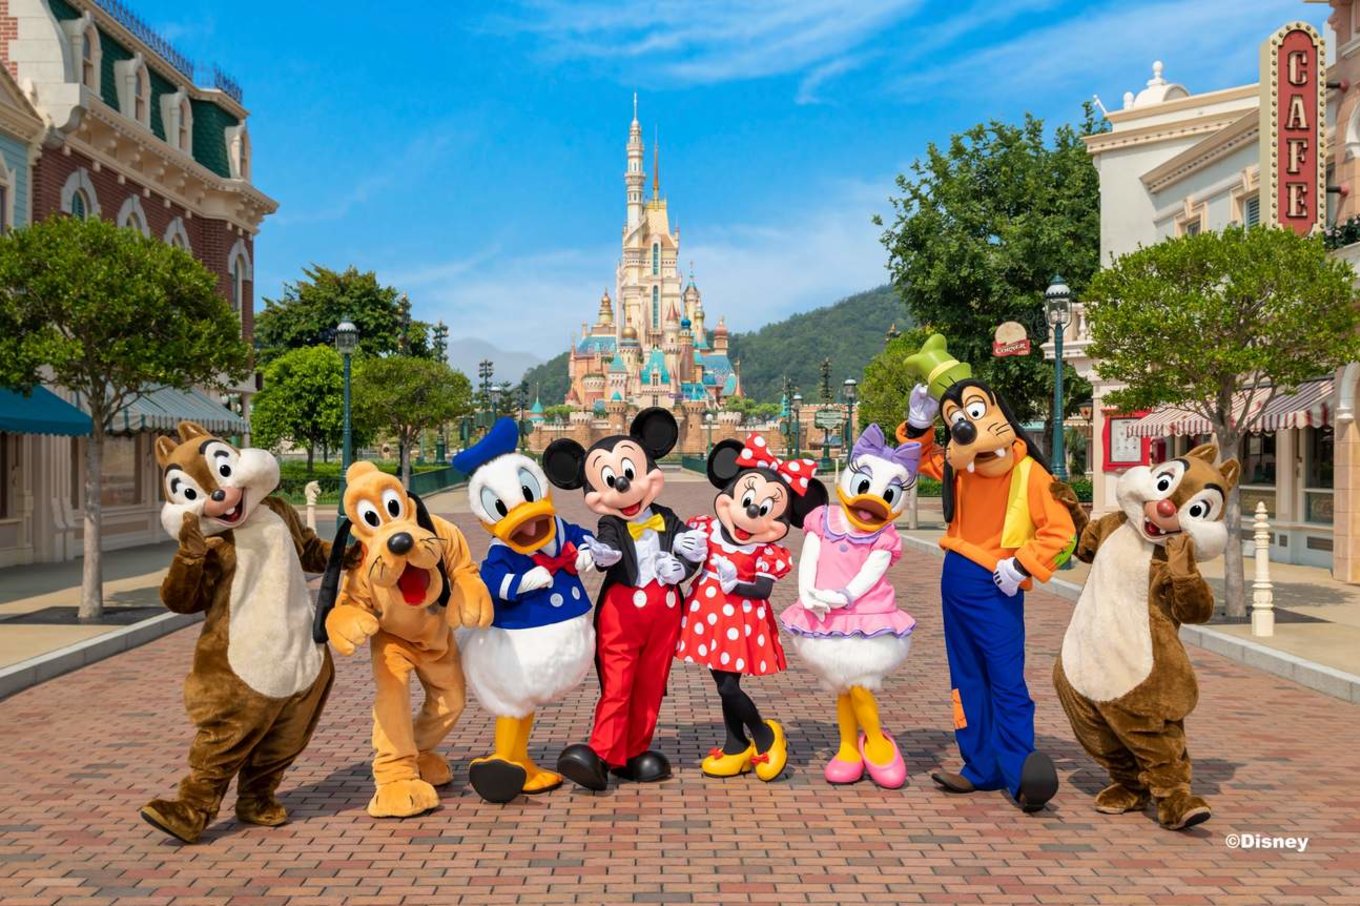 HK Disneyland Cast Members